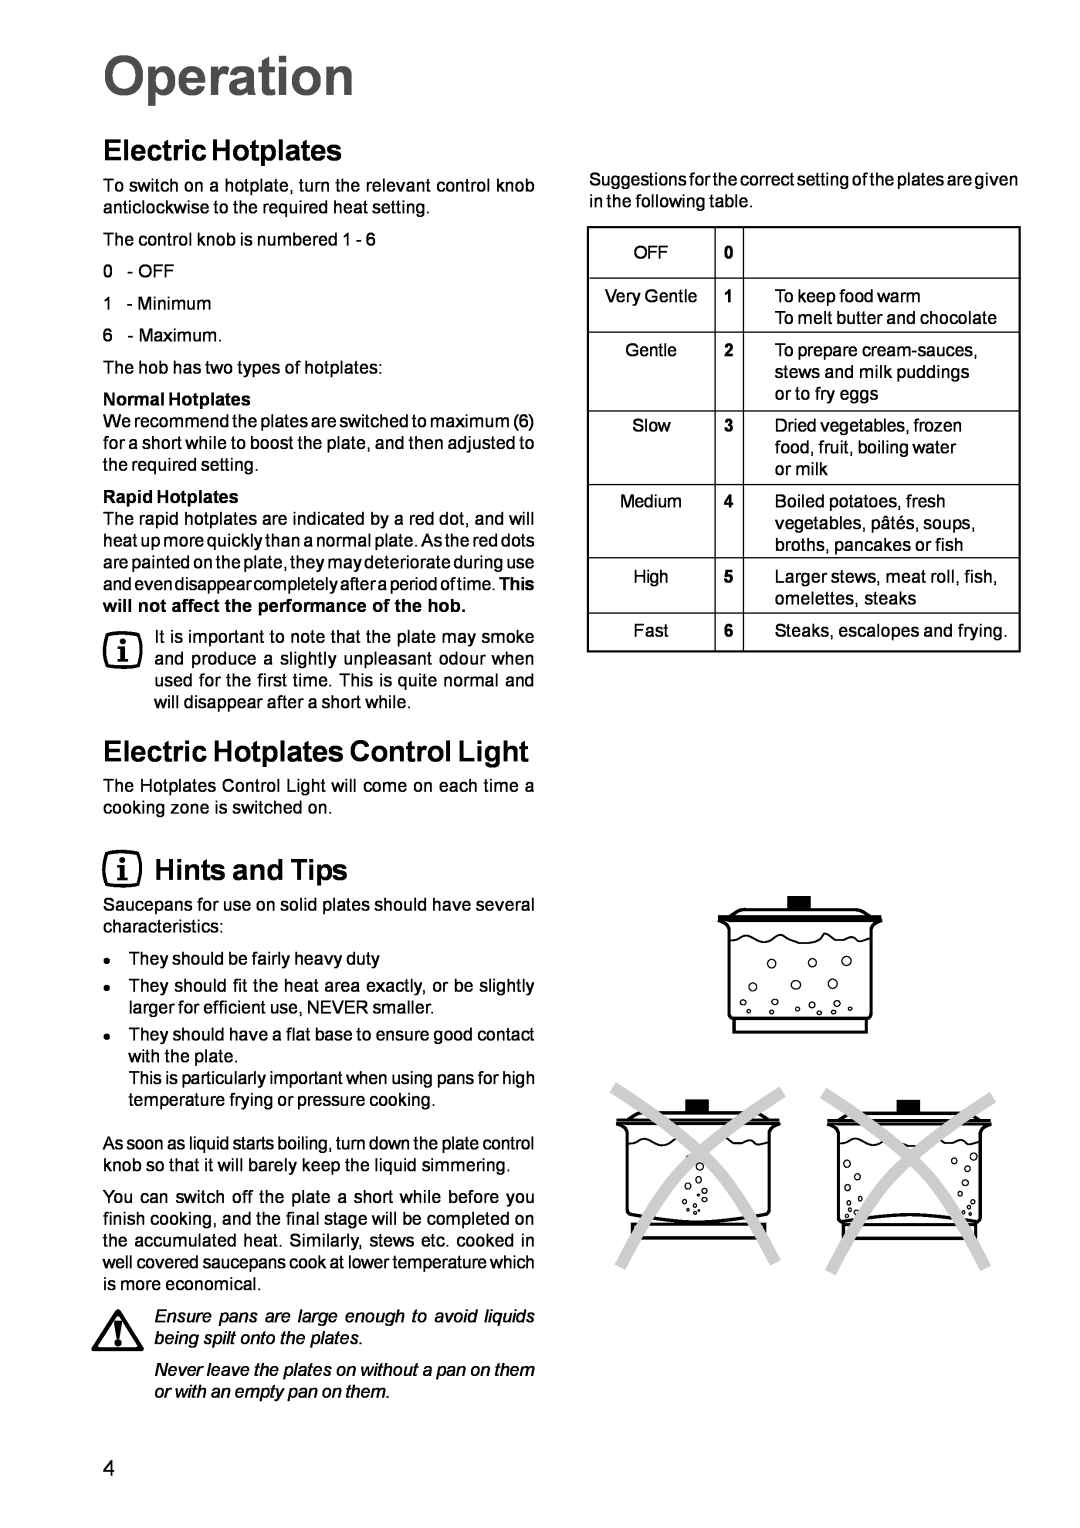 Zanussi ZEL 63 manual Operation, Electric Hotplates Control Light, Hints and Tips 